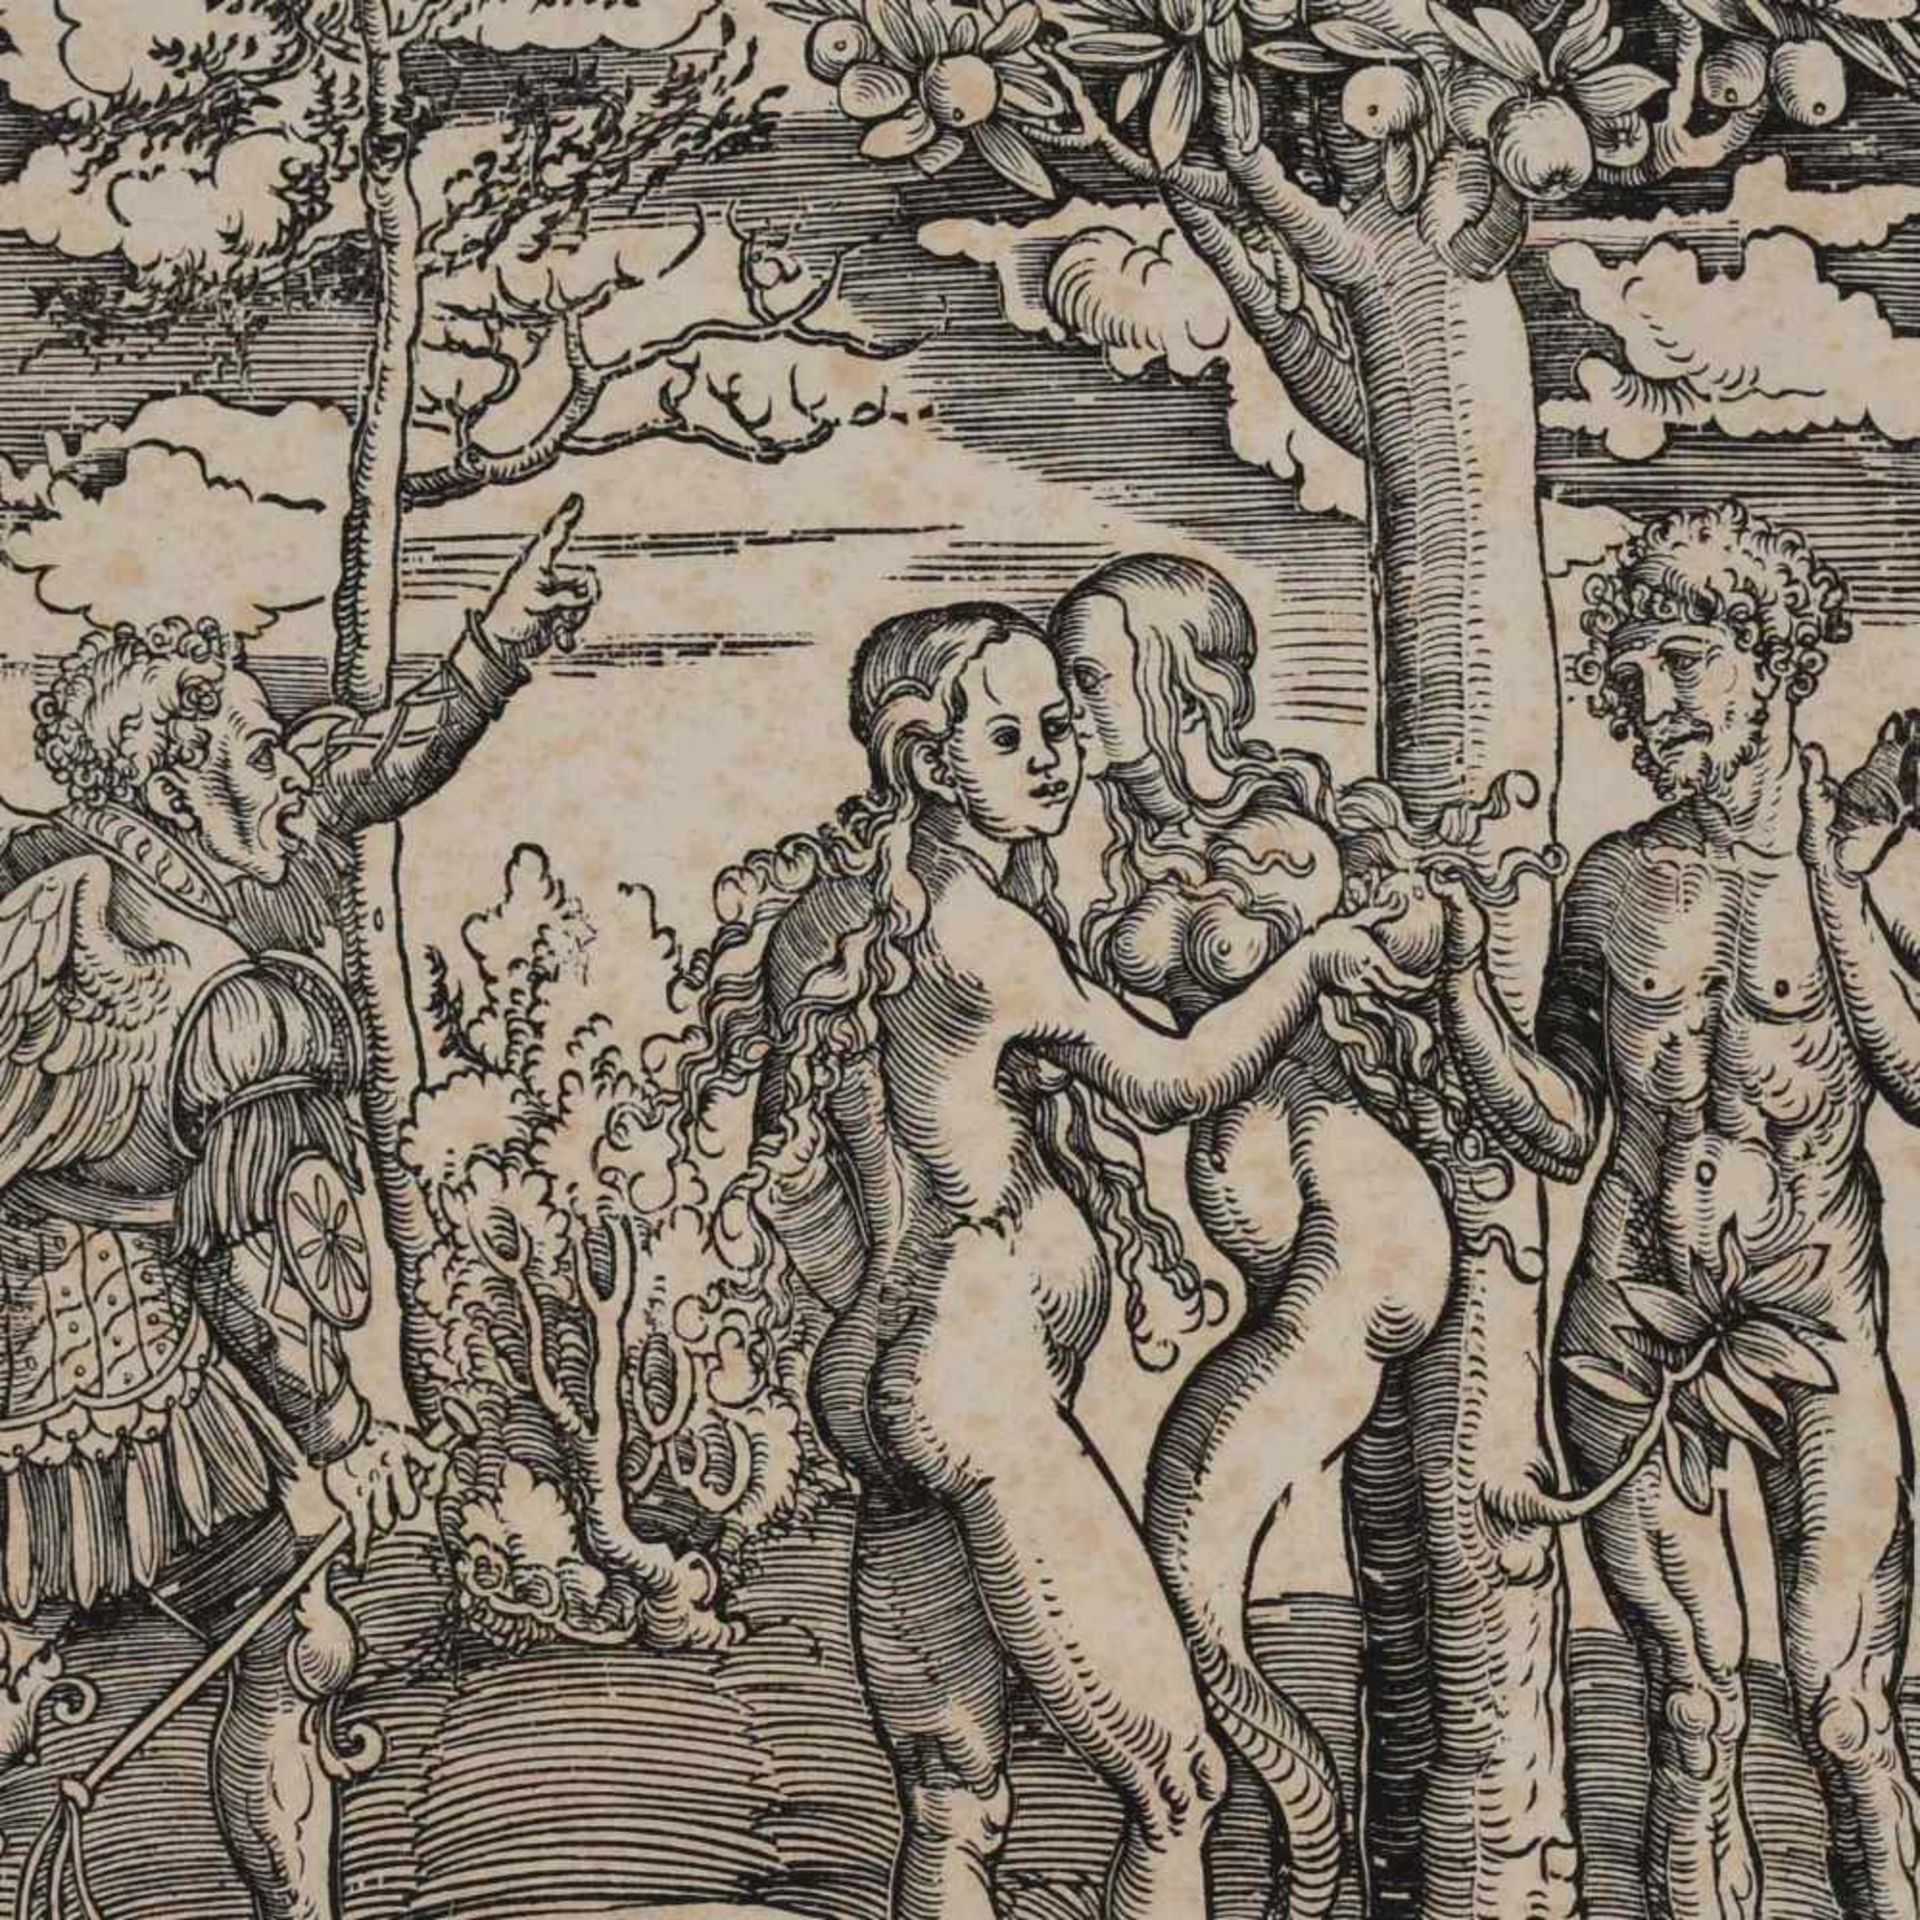 Cranach, Lucas d. Ä. (um 1472 Kronach - 1553 Weimar) Holzschnitt, "Der Sündenfall", Szene mit